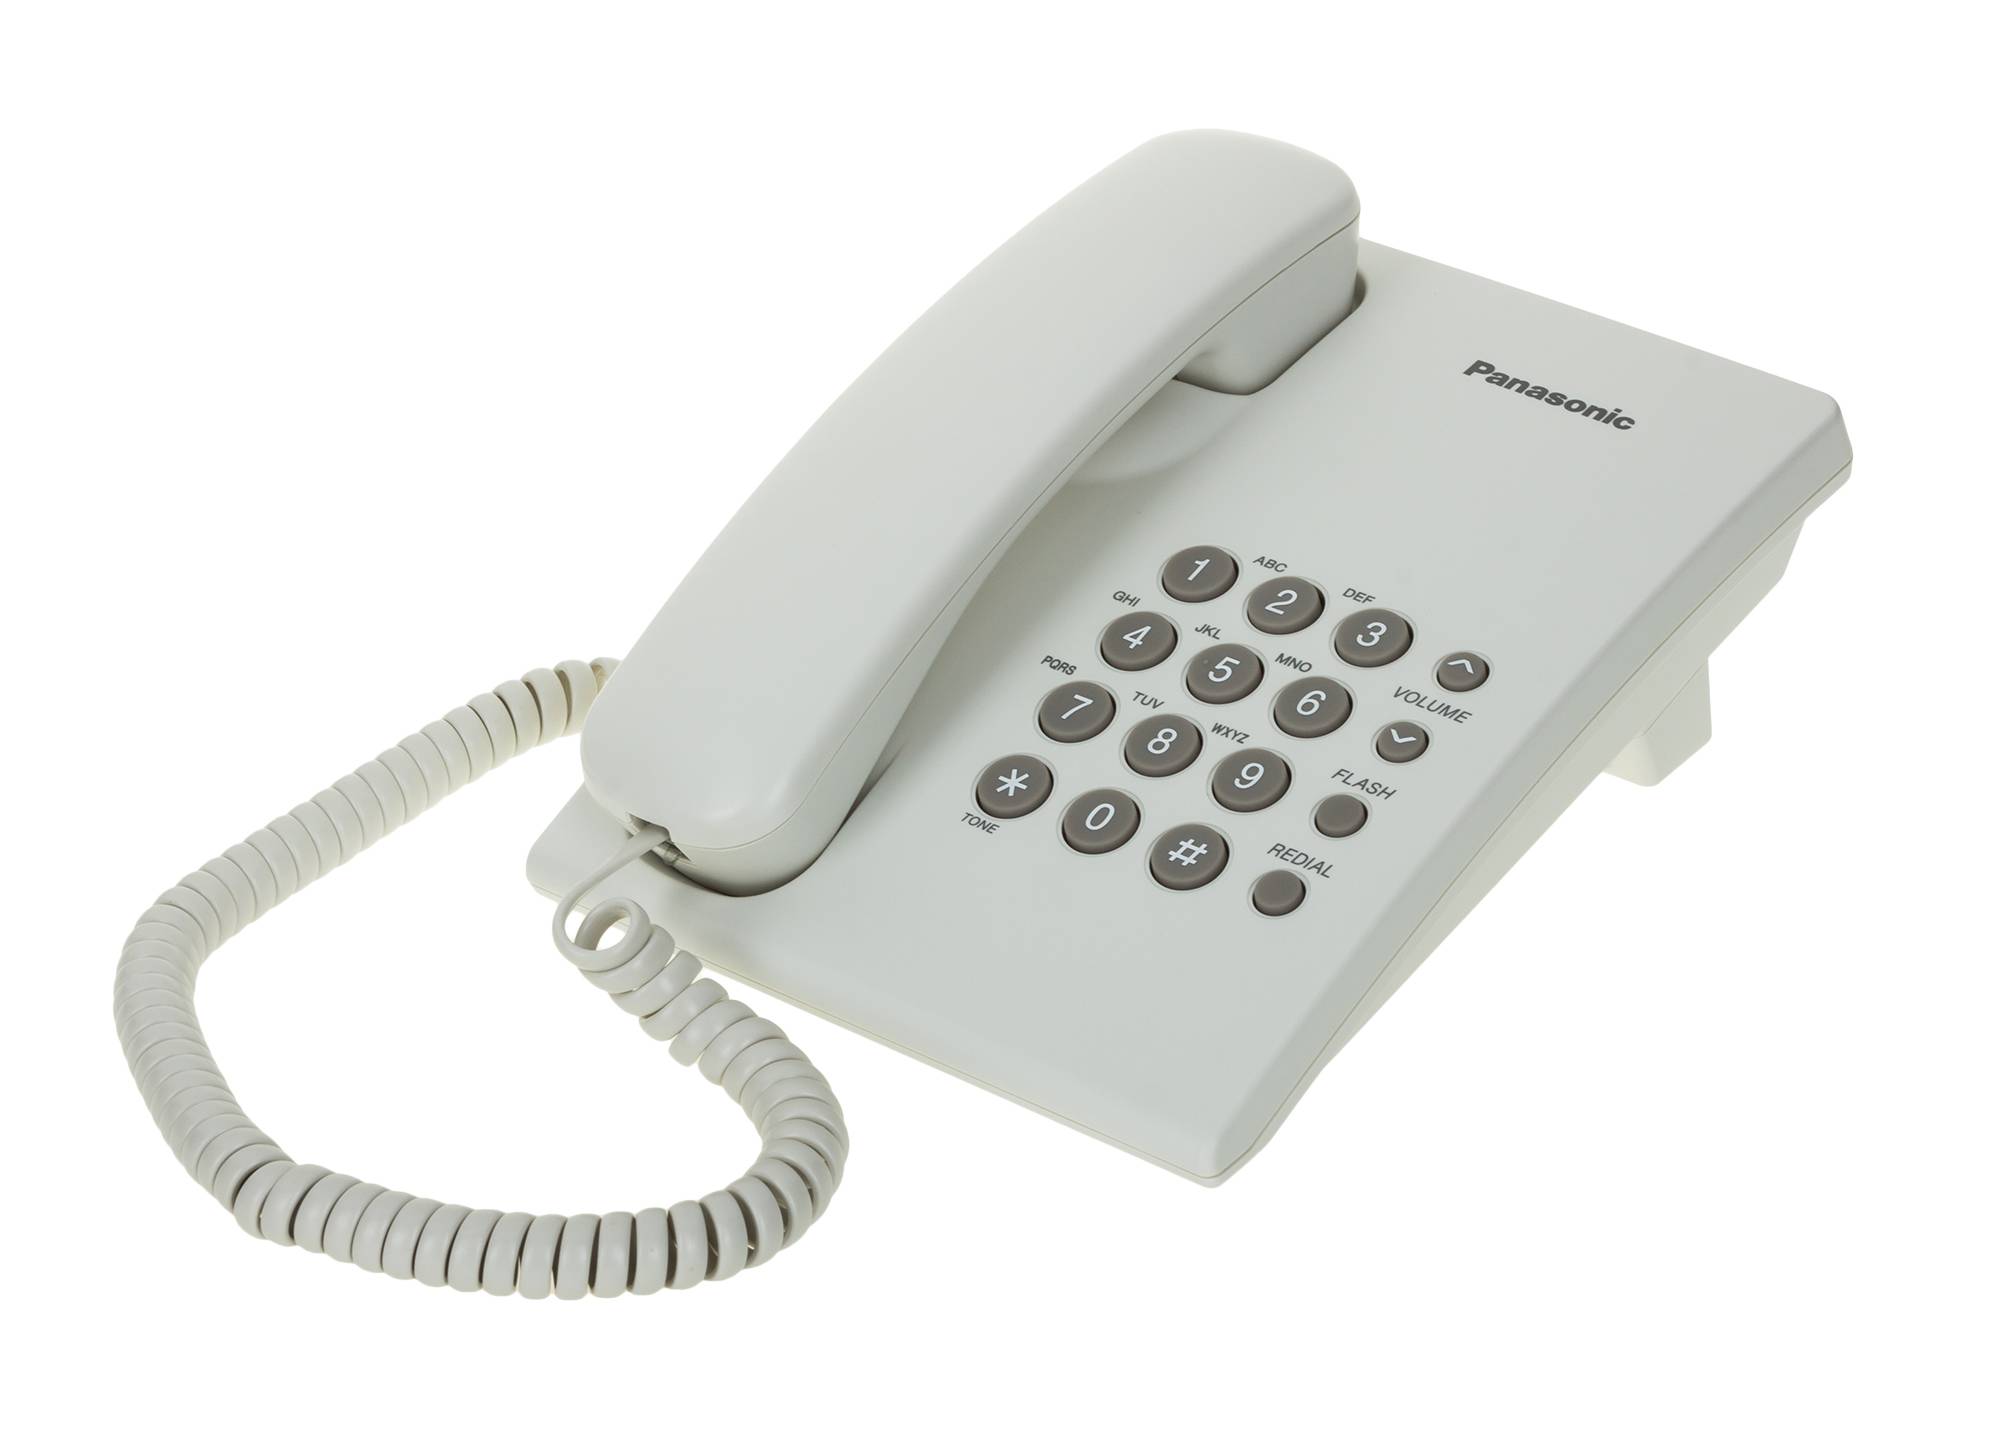 Panasonic kx ts2350. Телефон Panasonic KX-ts2350 ruw белый. Panasonic KX-ts2350ruw белый. Телефон Panasonic KX-ts2350ruw. Аппарат телефонный проводной Panasonic KX-ts2350.